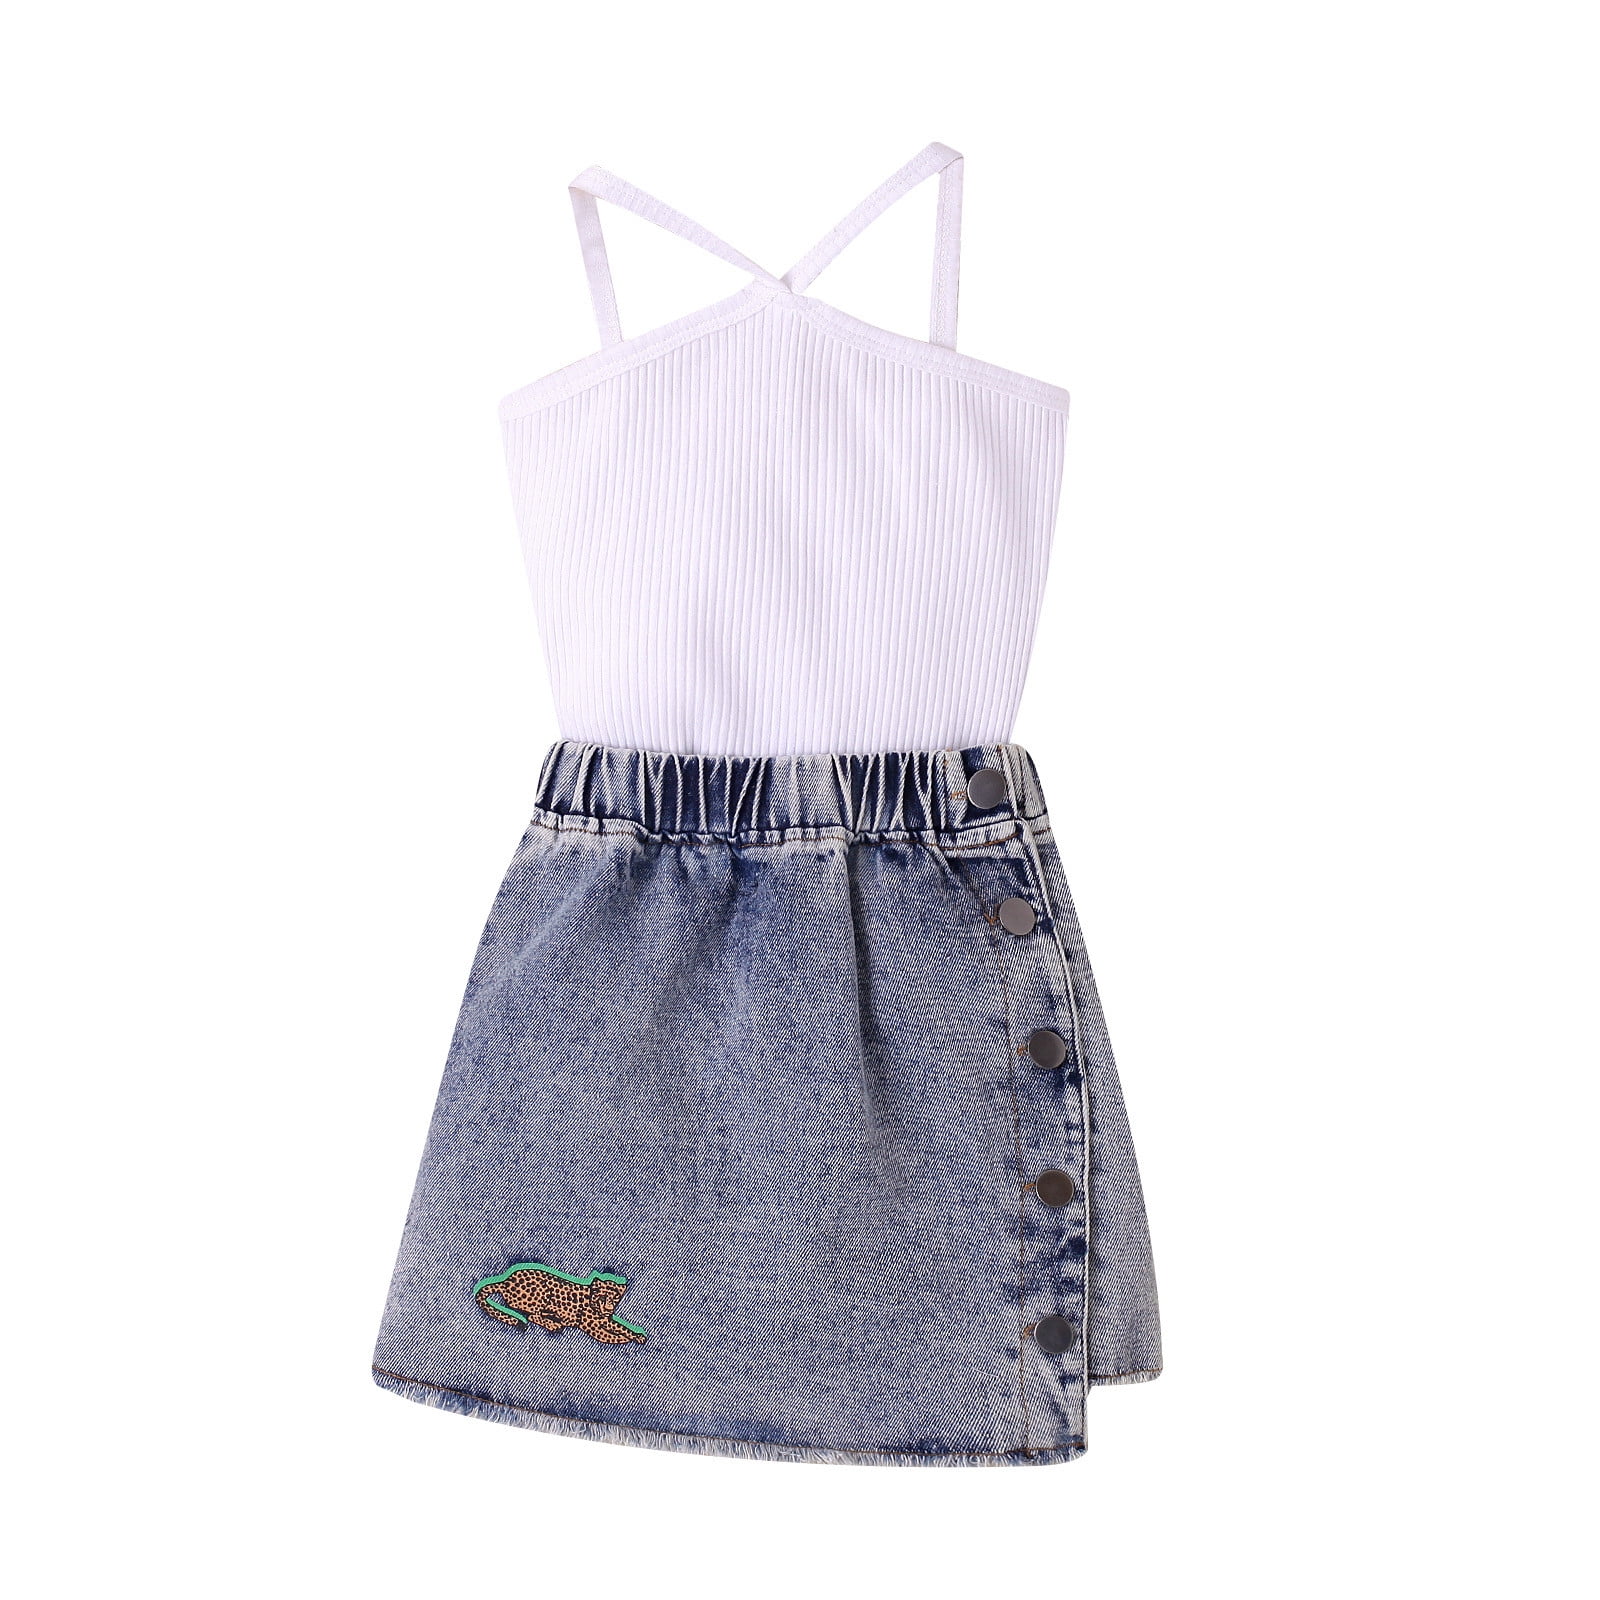 ZHAGHMIN Cute Clothes for Kids Kids Child Baby Girls Summer Set